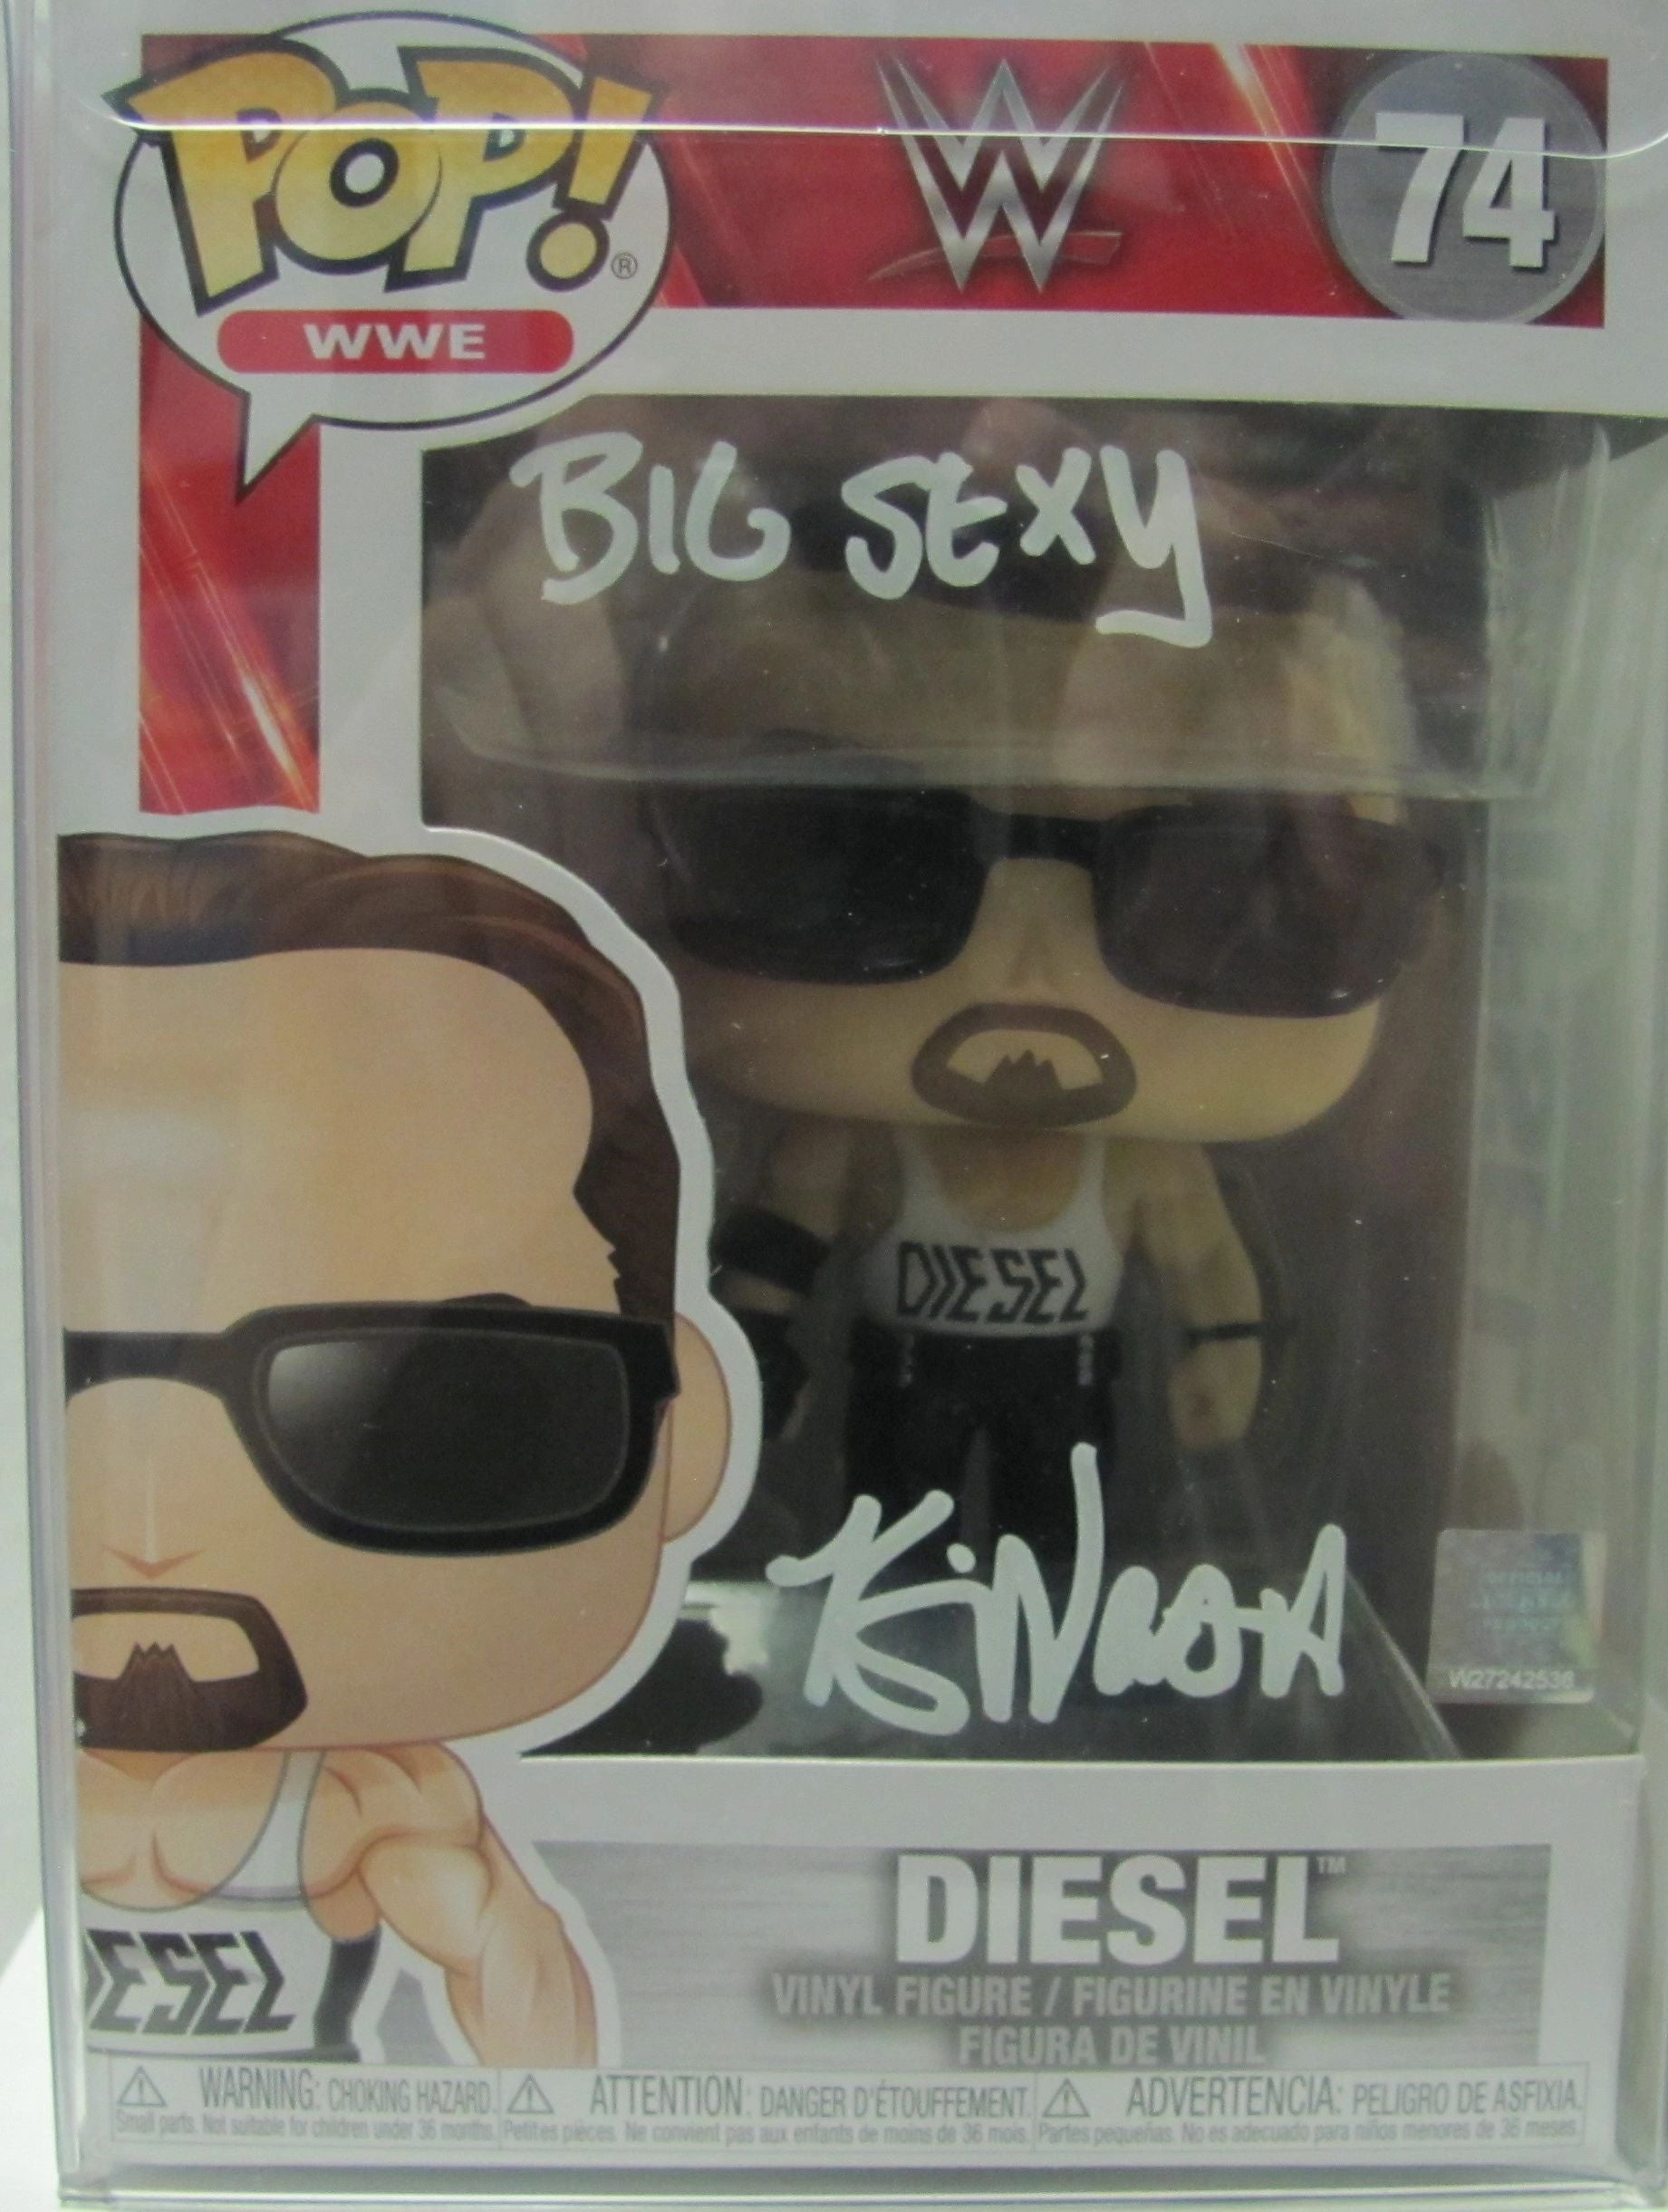 Diesel Autograph Funko POP! WWE #74 Kevin Nash Signed INSCRIBED "Big Sexy" JSA COA